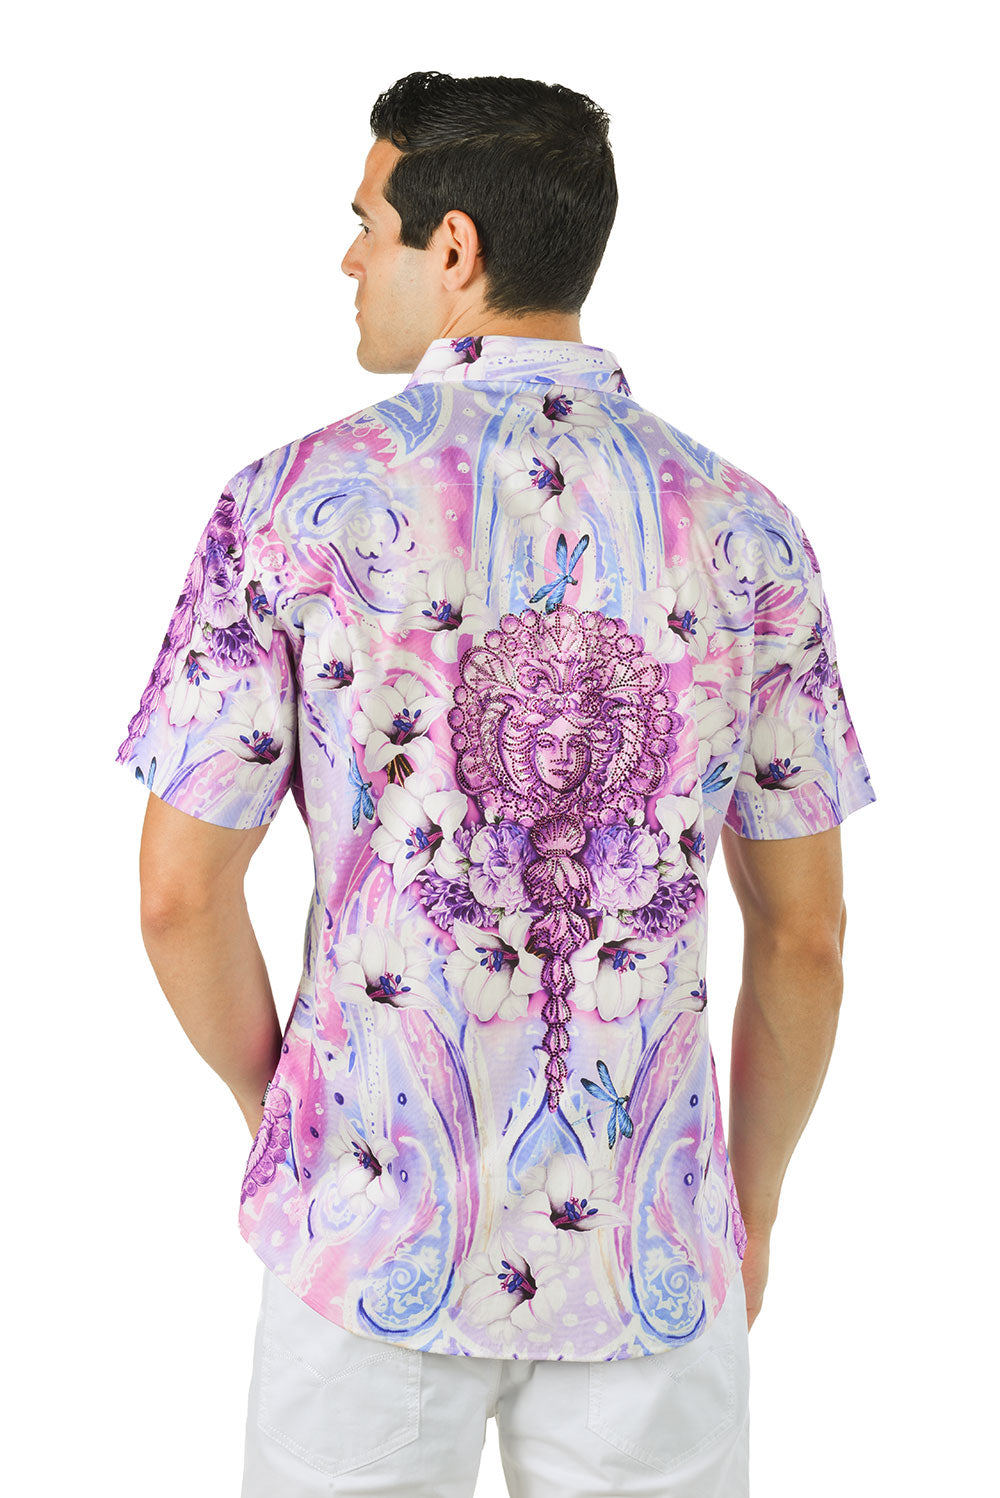 BARABAS Men's medusa paisley rhinestones graphic short sleeve shirt SSR19 multi